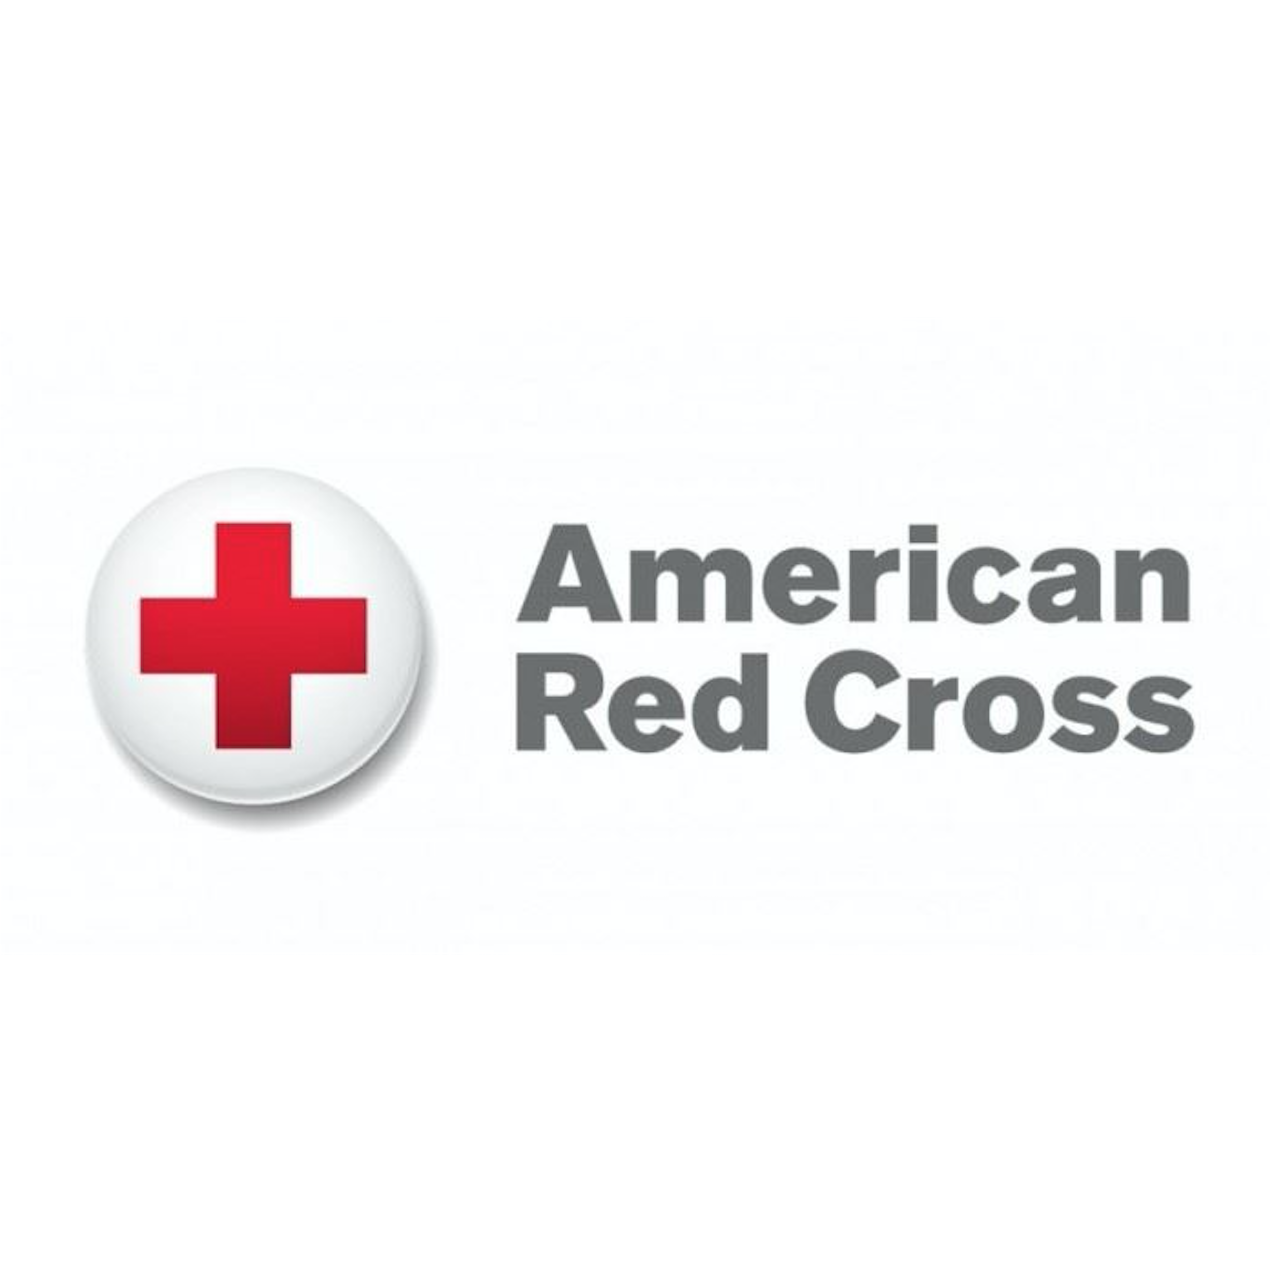 American red cross logo